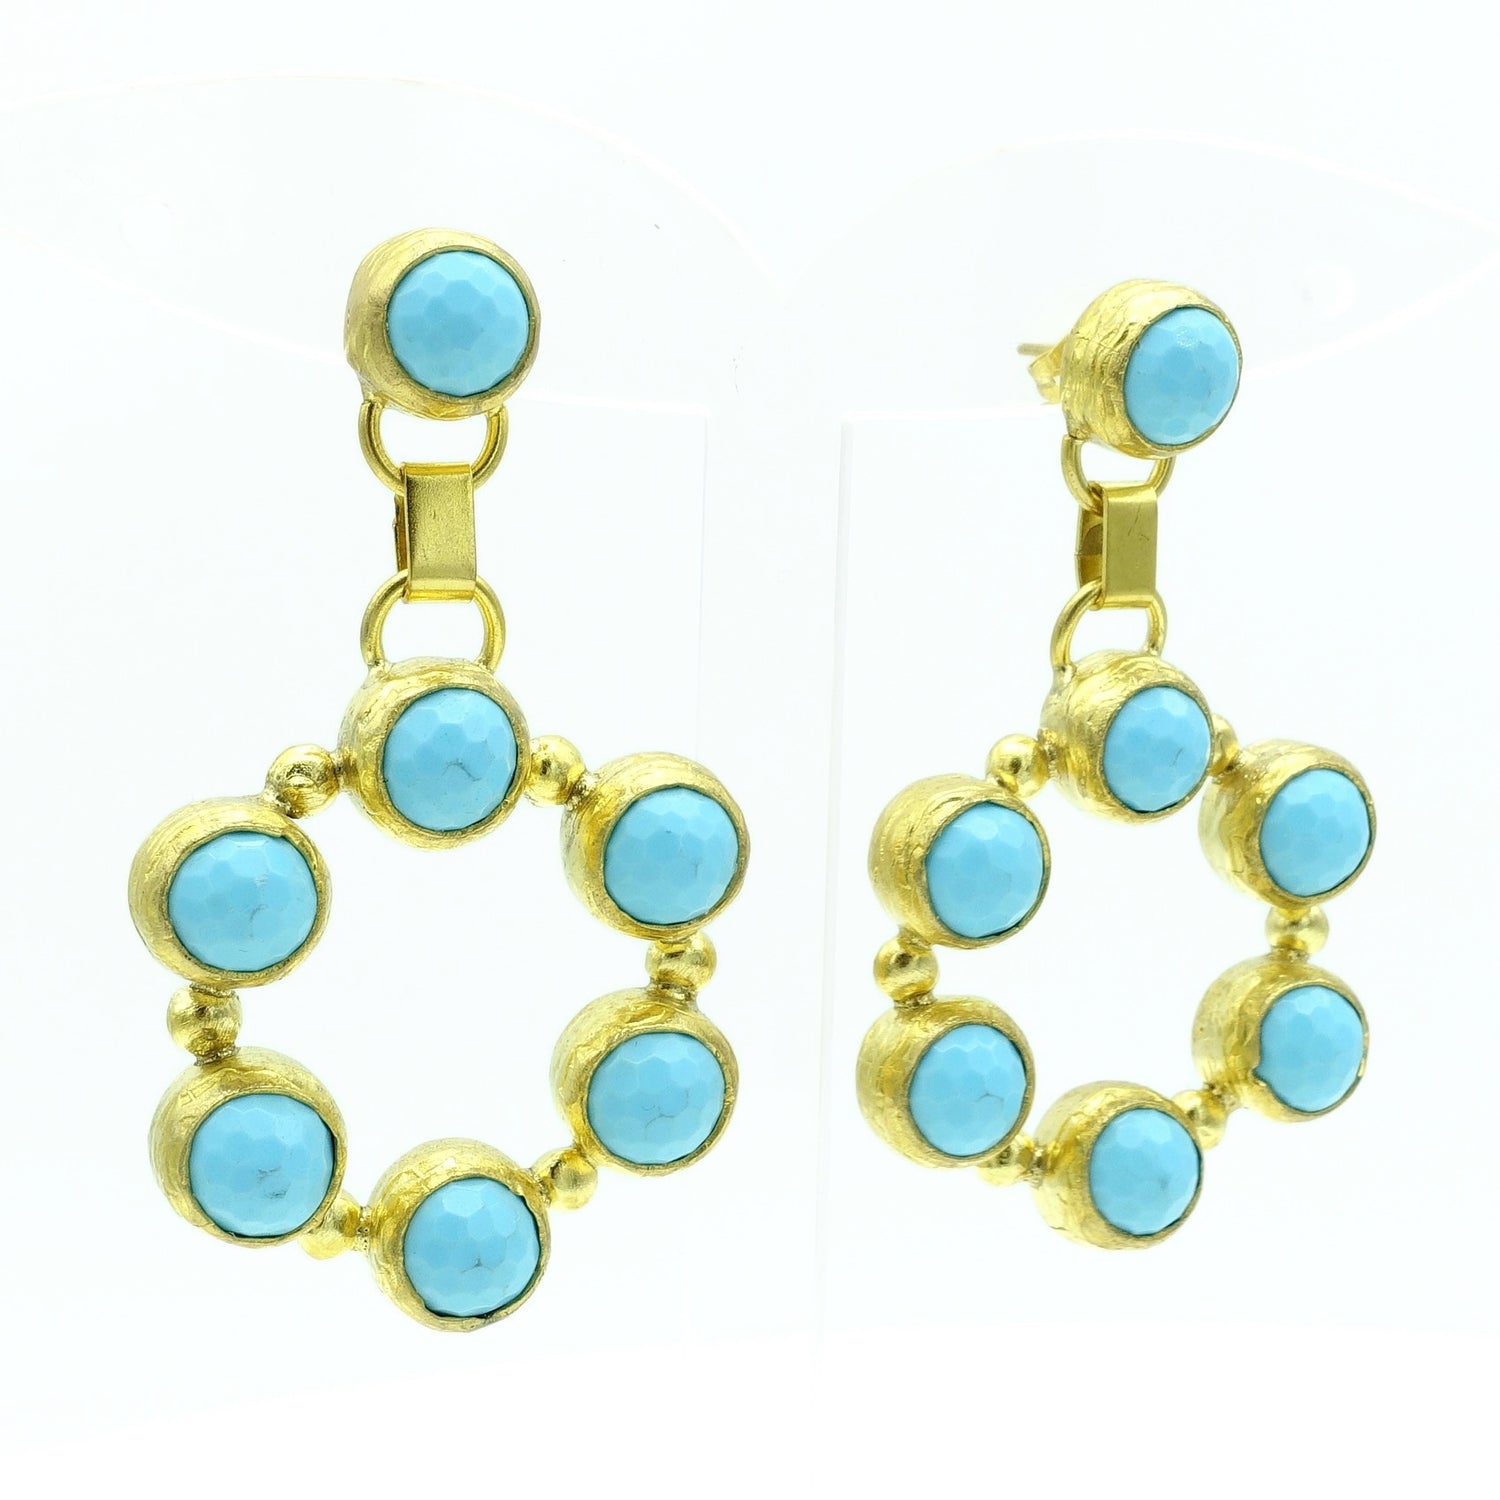 Aylas  Turquoise earrings 21ct Gold plated semi precious gemstone - Handmade